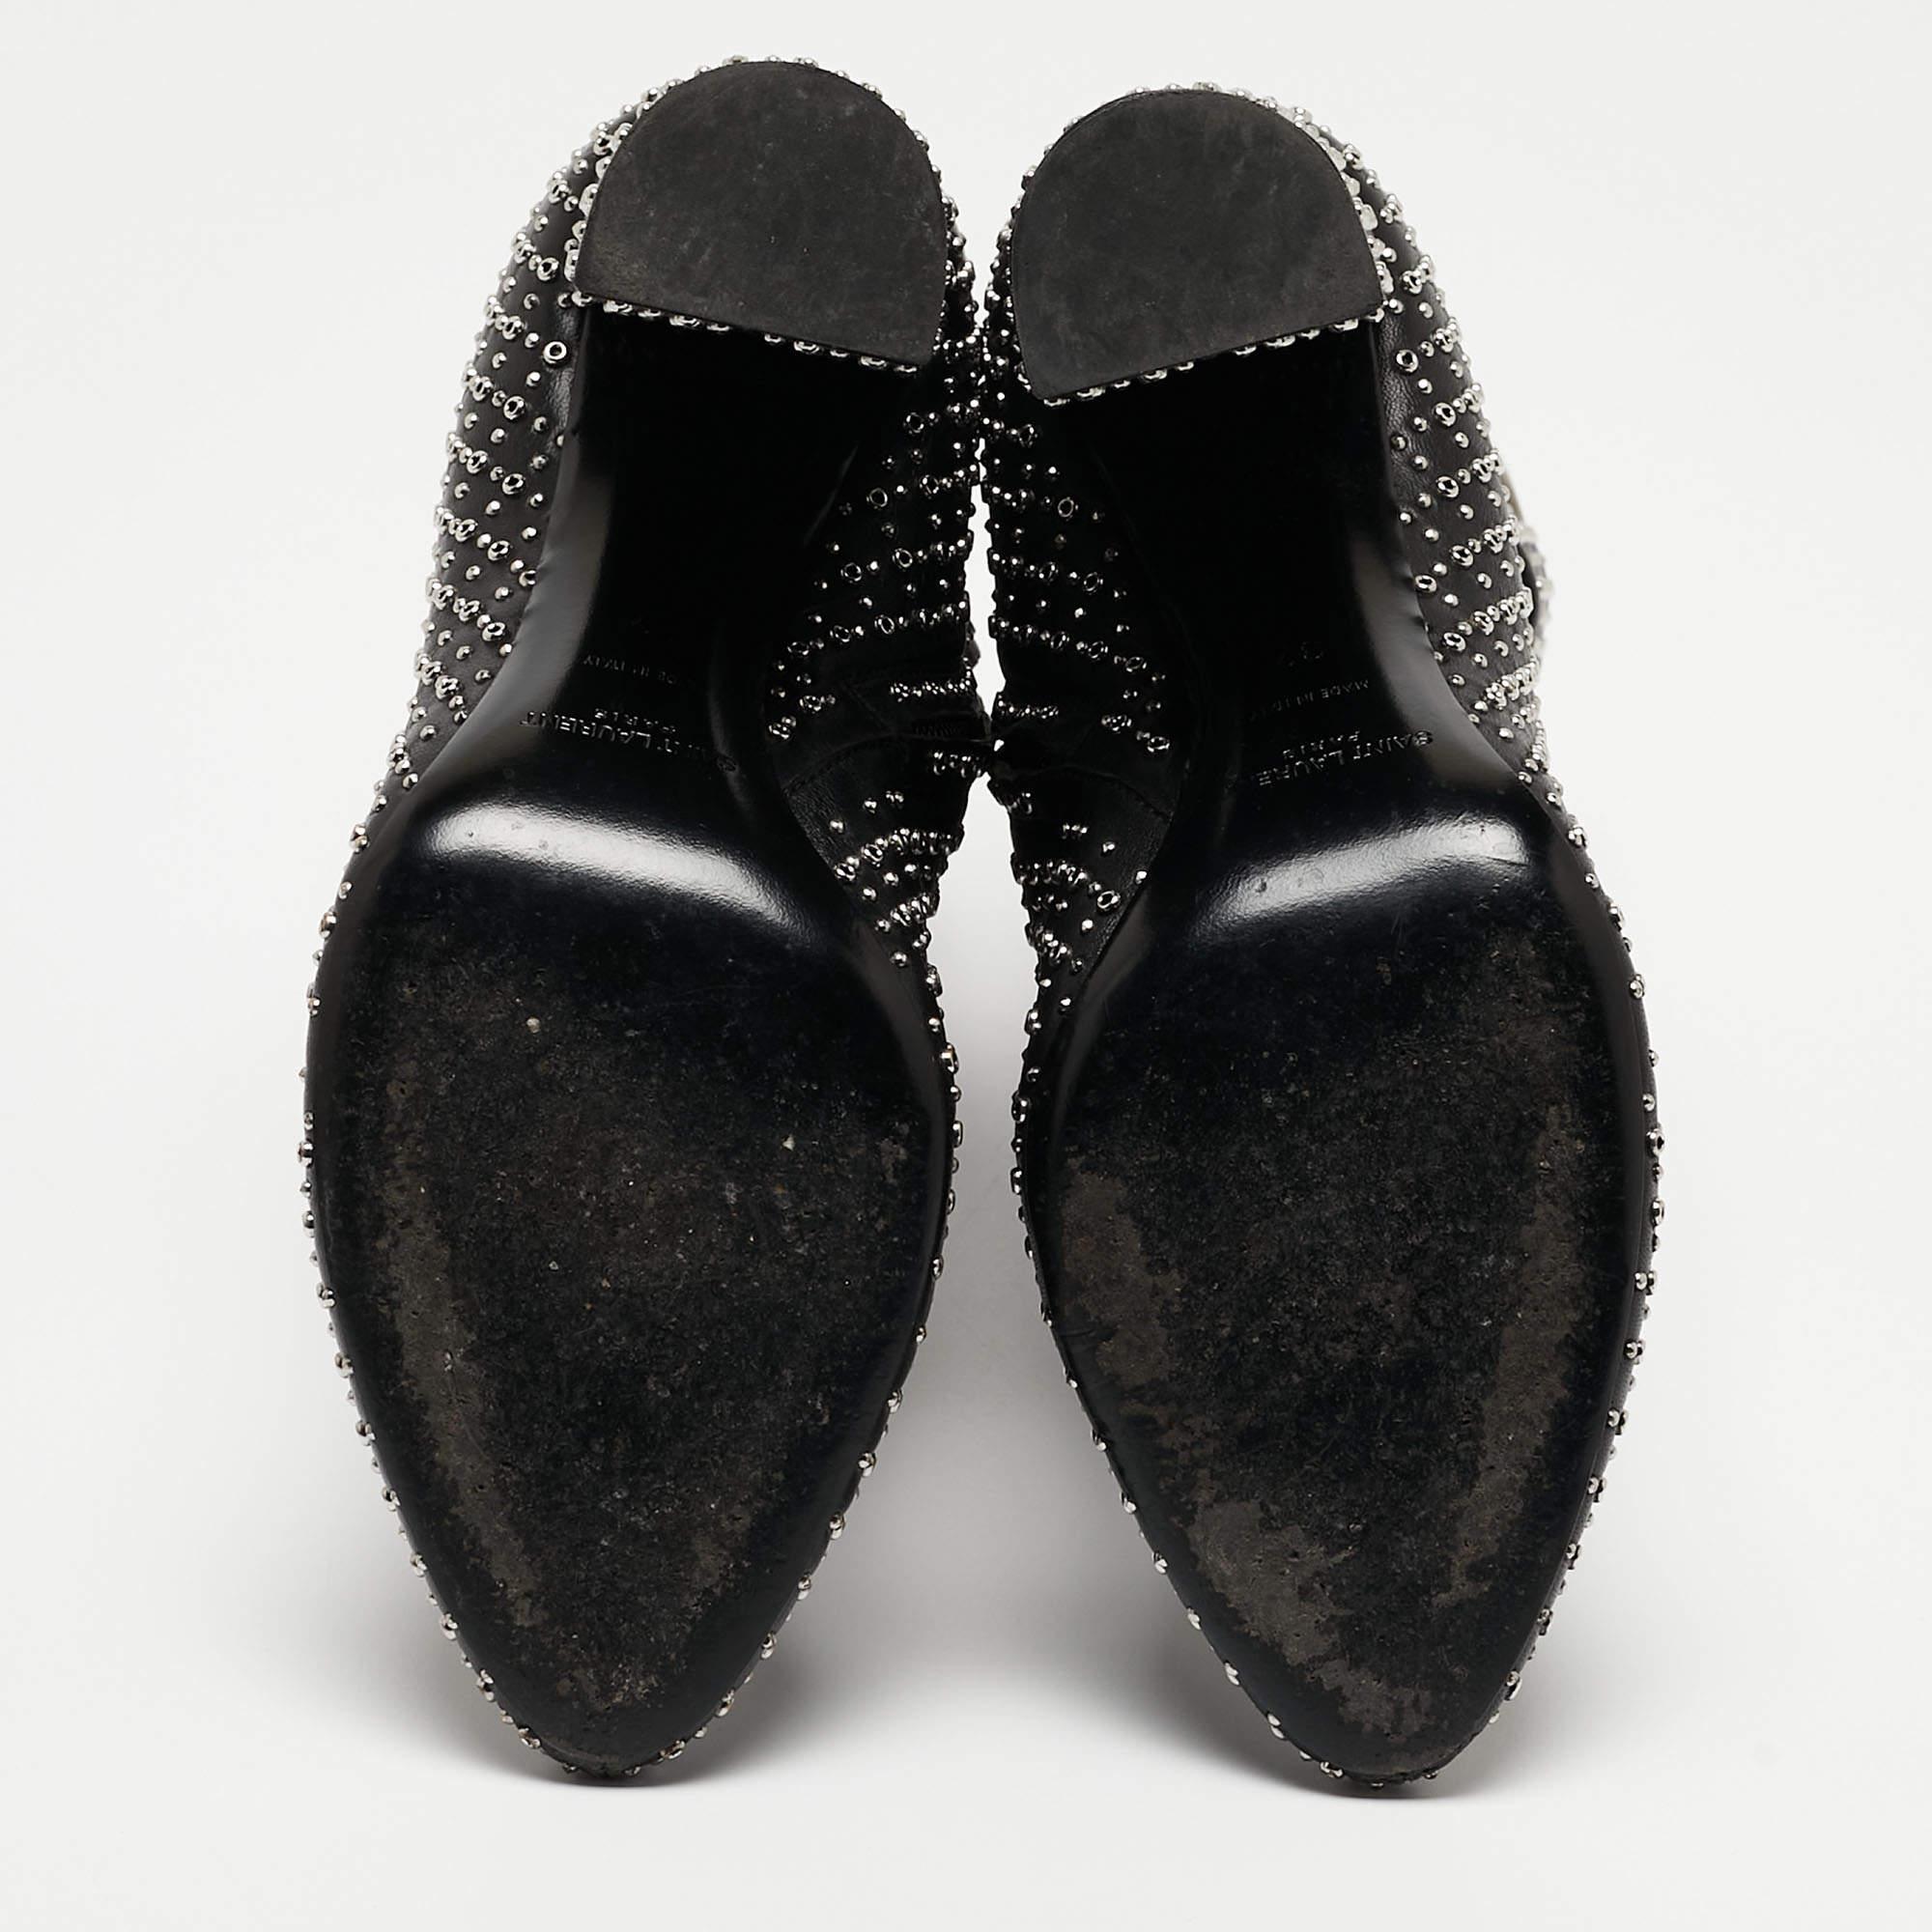 Saint Laurent Black Leather Buckle Ankle Boots Size 37 For Sale 3